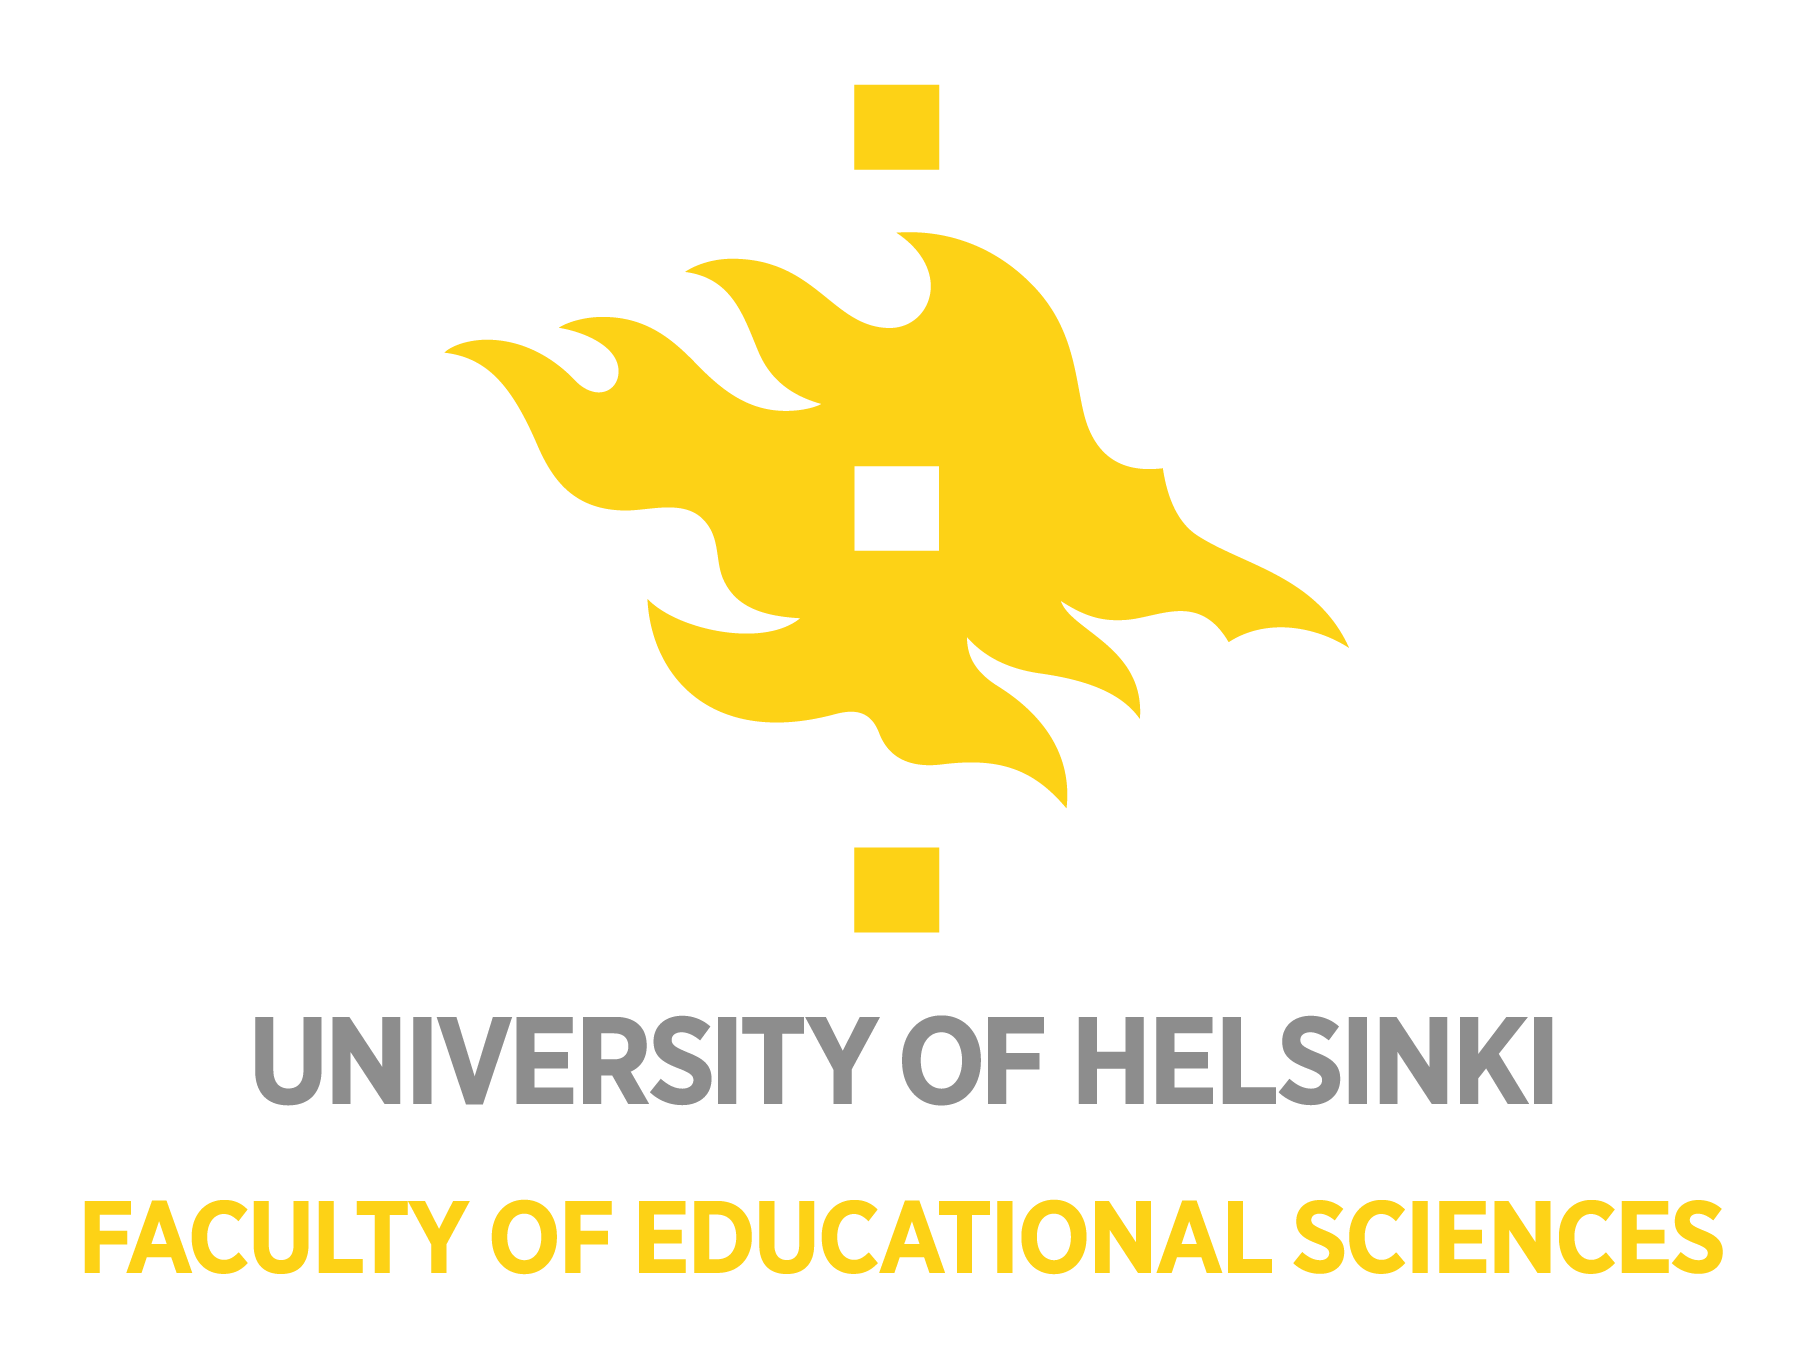 University of Helsinki Faculty of Educational Sciences